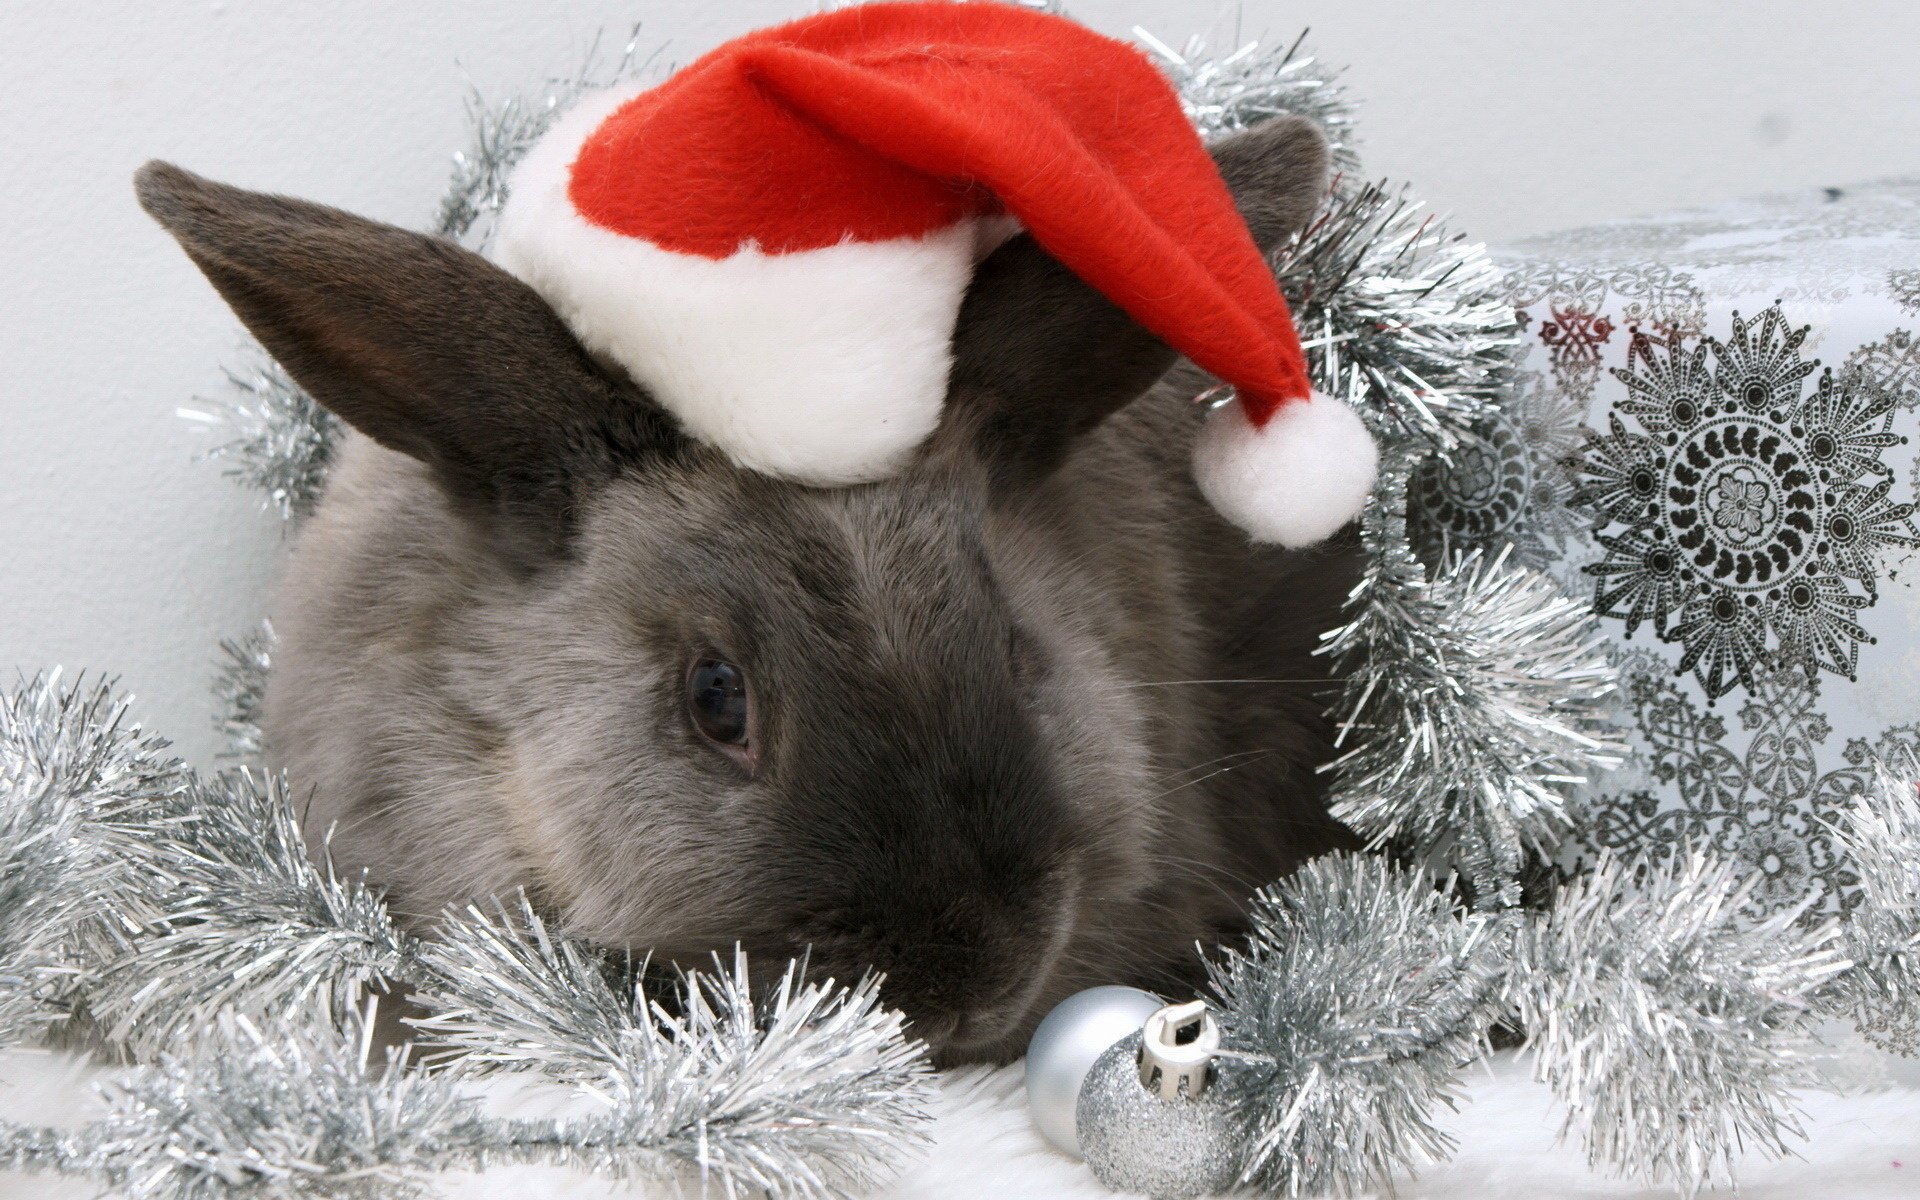 A rabbit in a Santa Claus hat